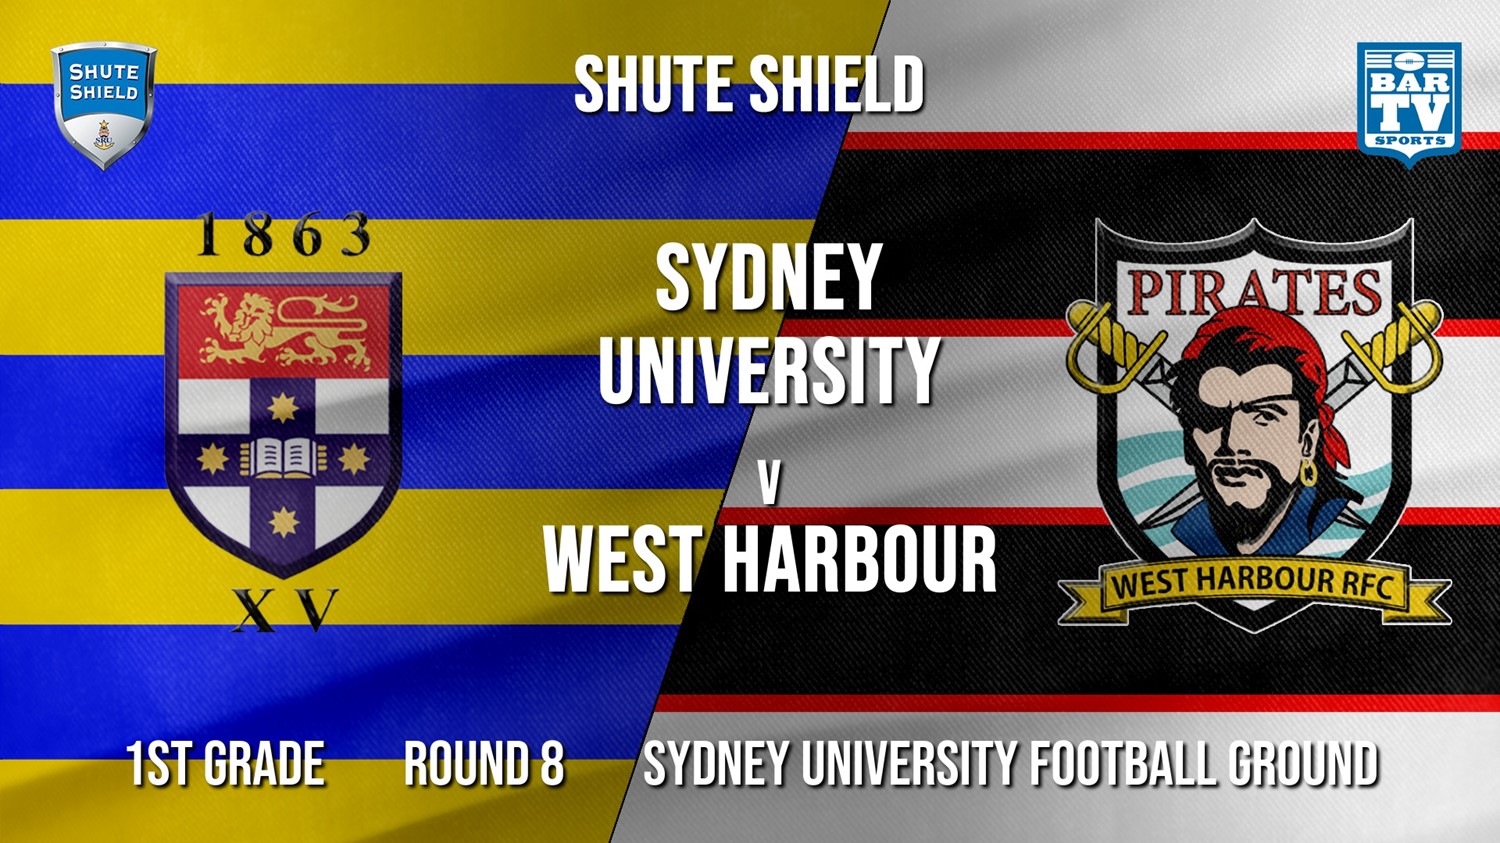 Shute Shield Round 8 - 1st Grade - Sydney University v West Harbour Minigame Slate Image